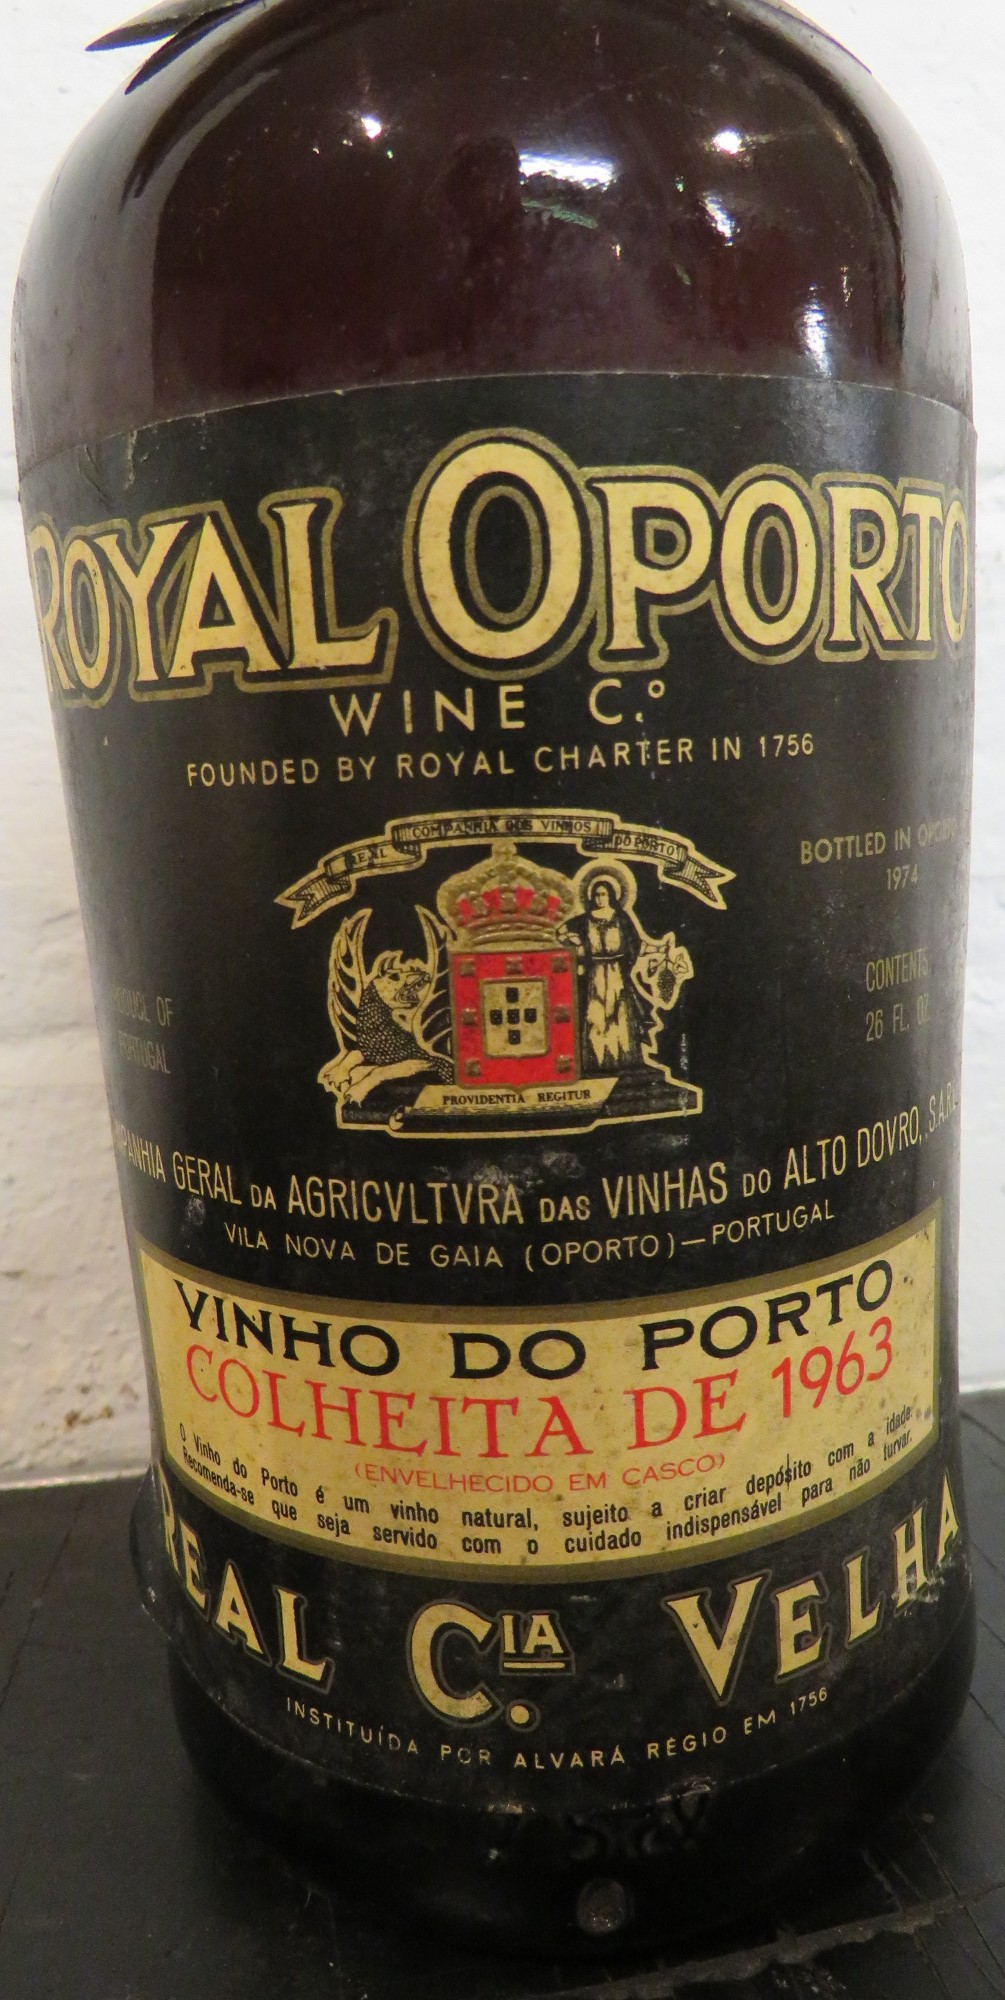 Royal Oporto Wine Co Vinho do Porto Coheita De 1963, bottled in Oporto 1974, 26 Fl. Oz, labelled - Image 2 of 2